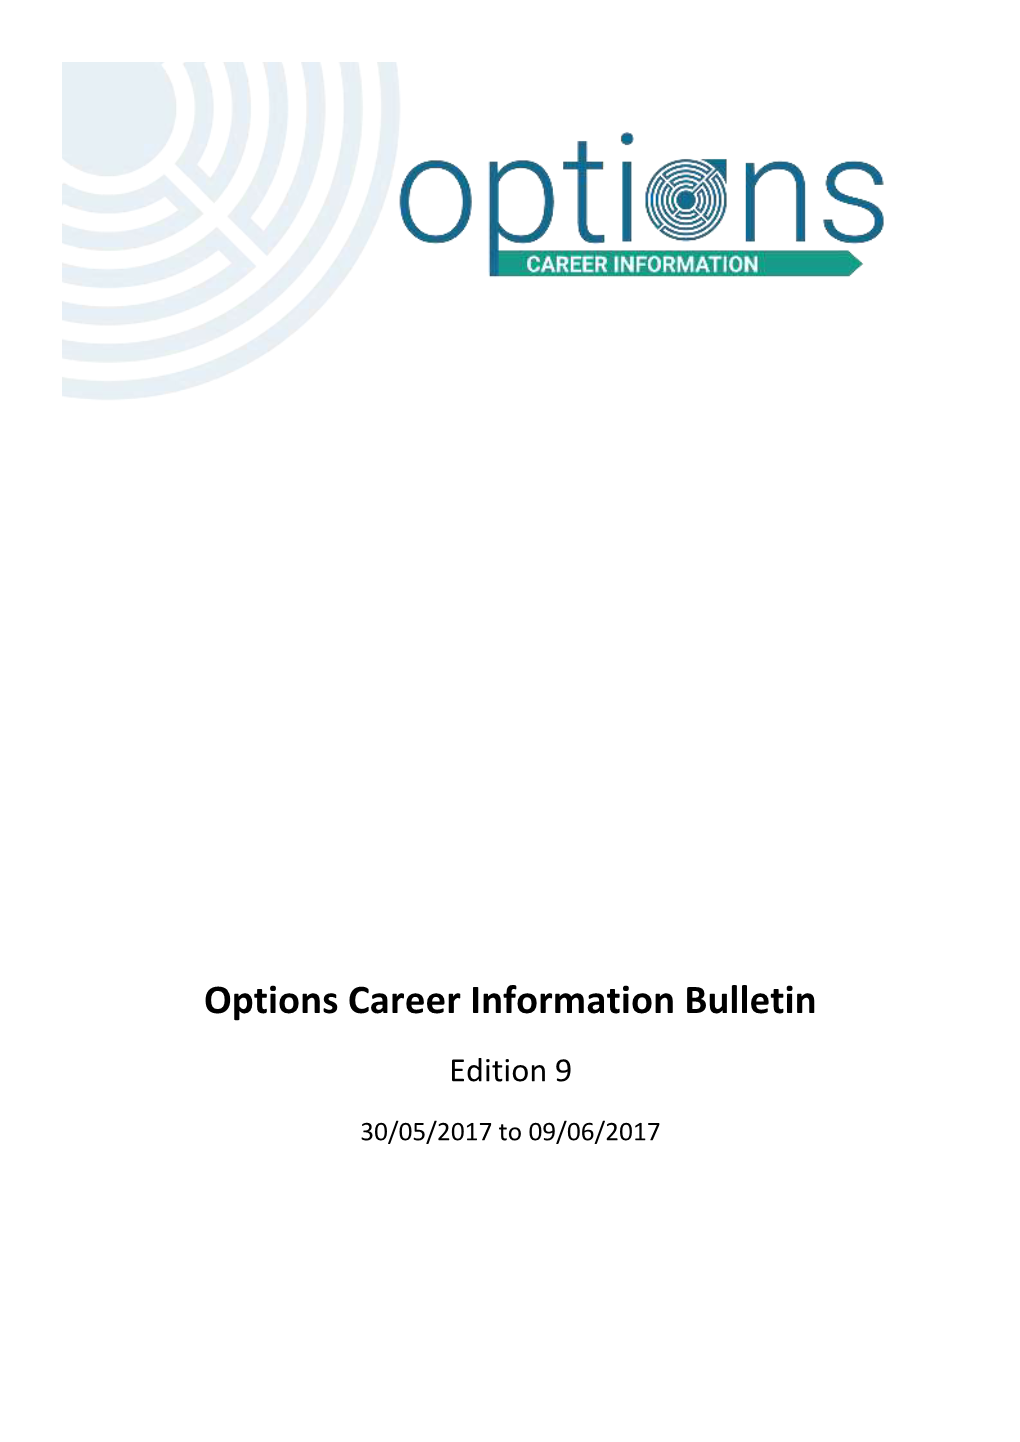 Options Career Information Bulletin Edition 9